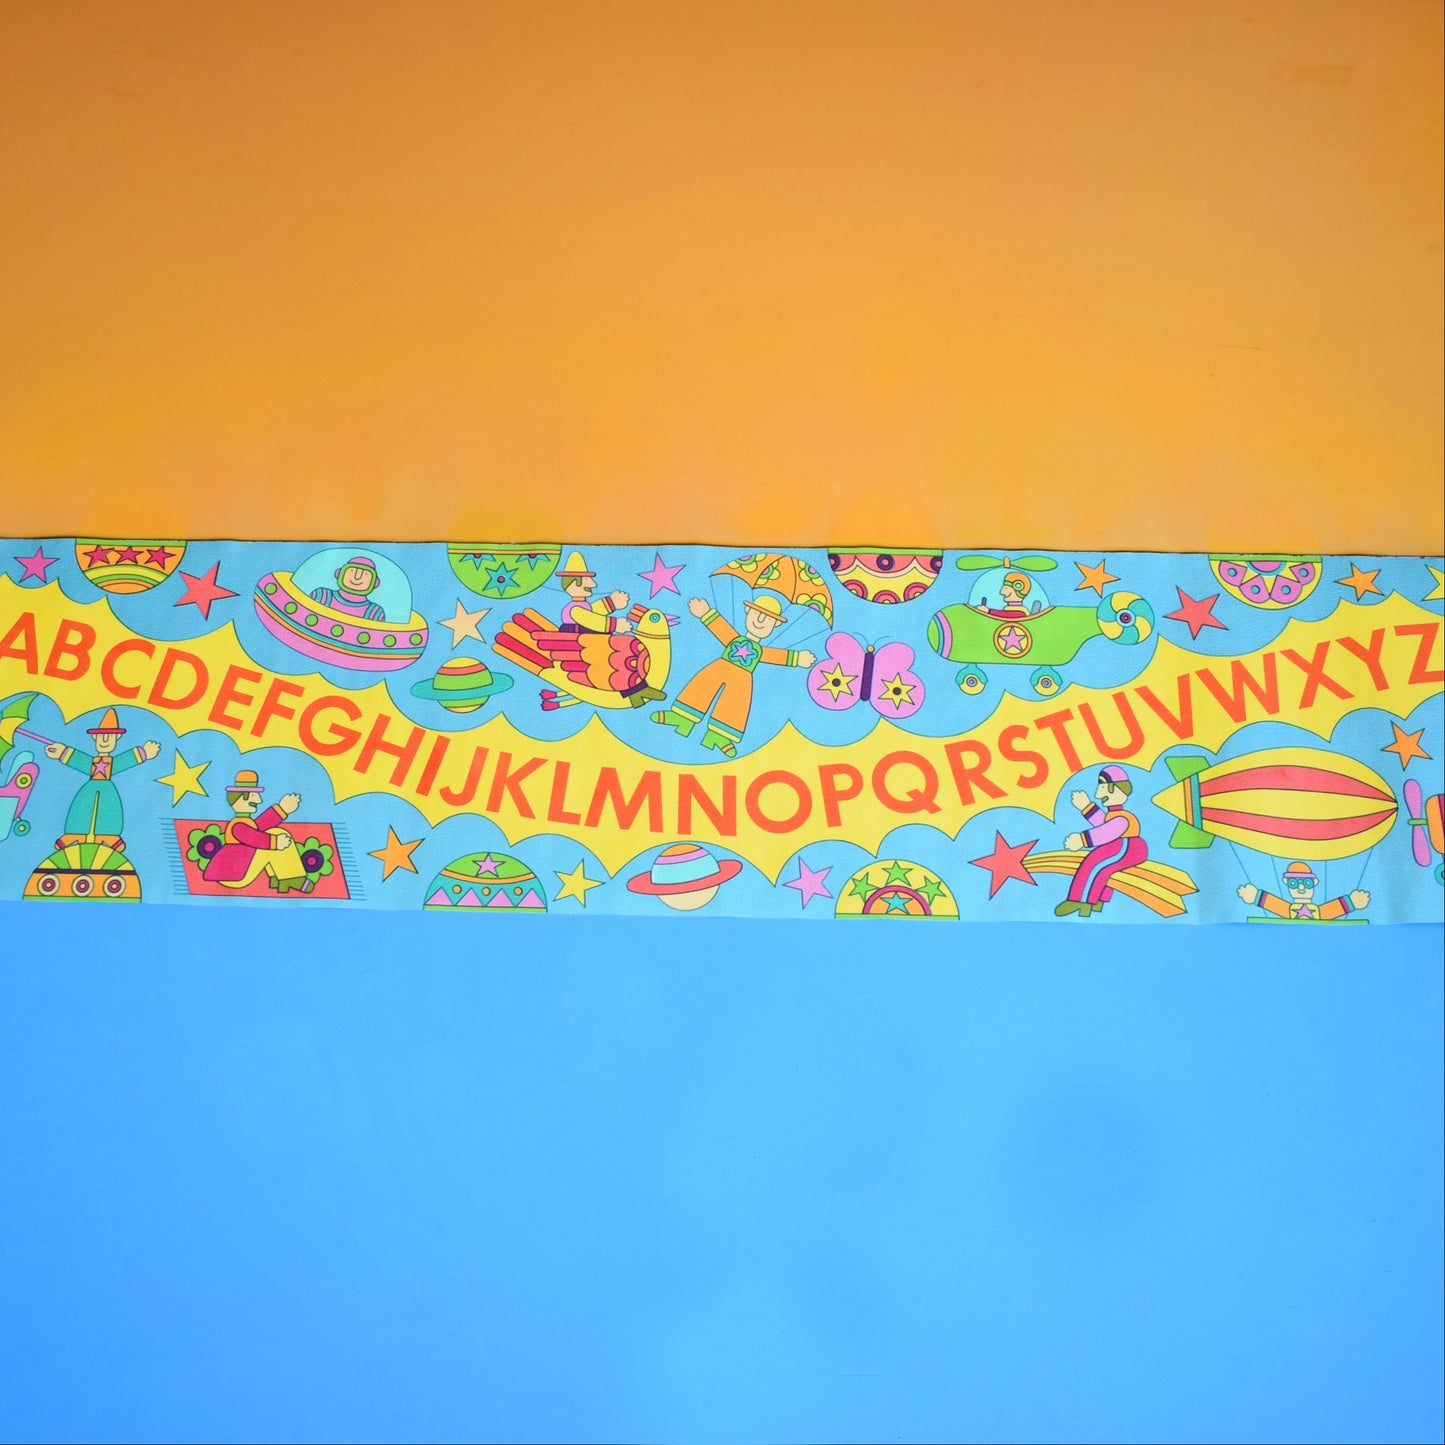 Vintage 1970s Wallpaper Frieze - Psychedelic Kids - Alphabet